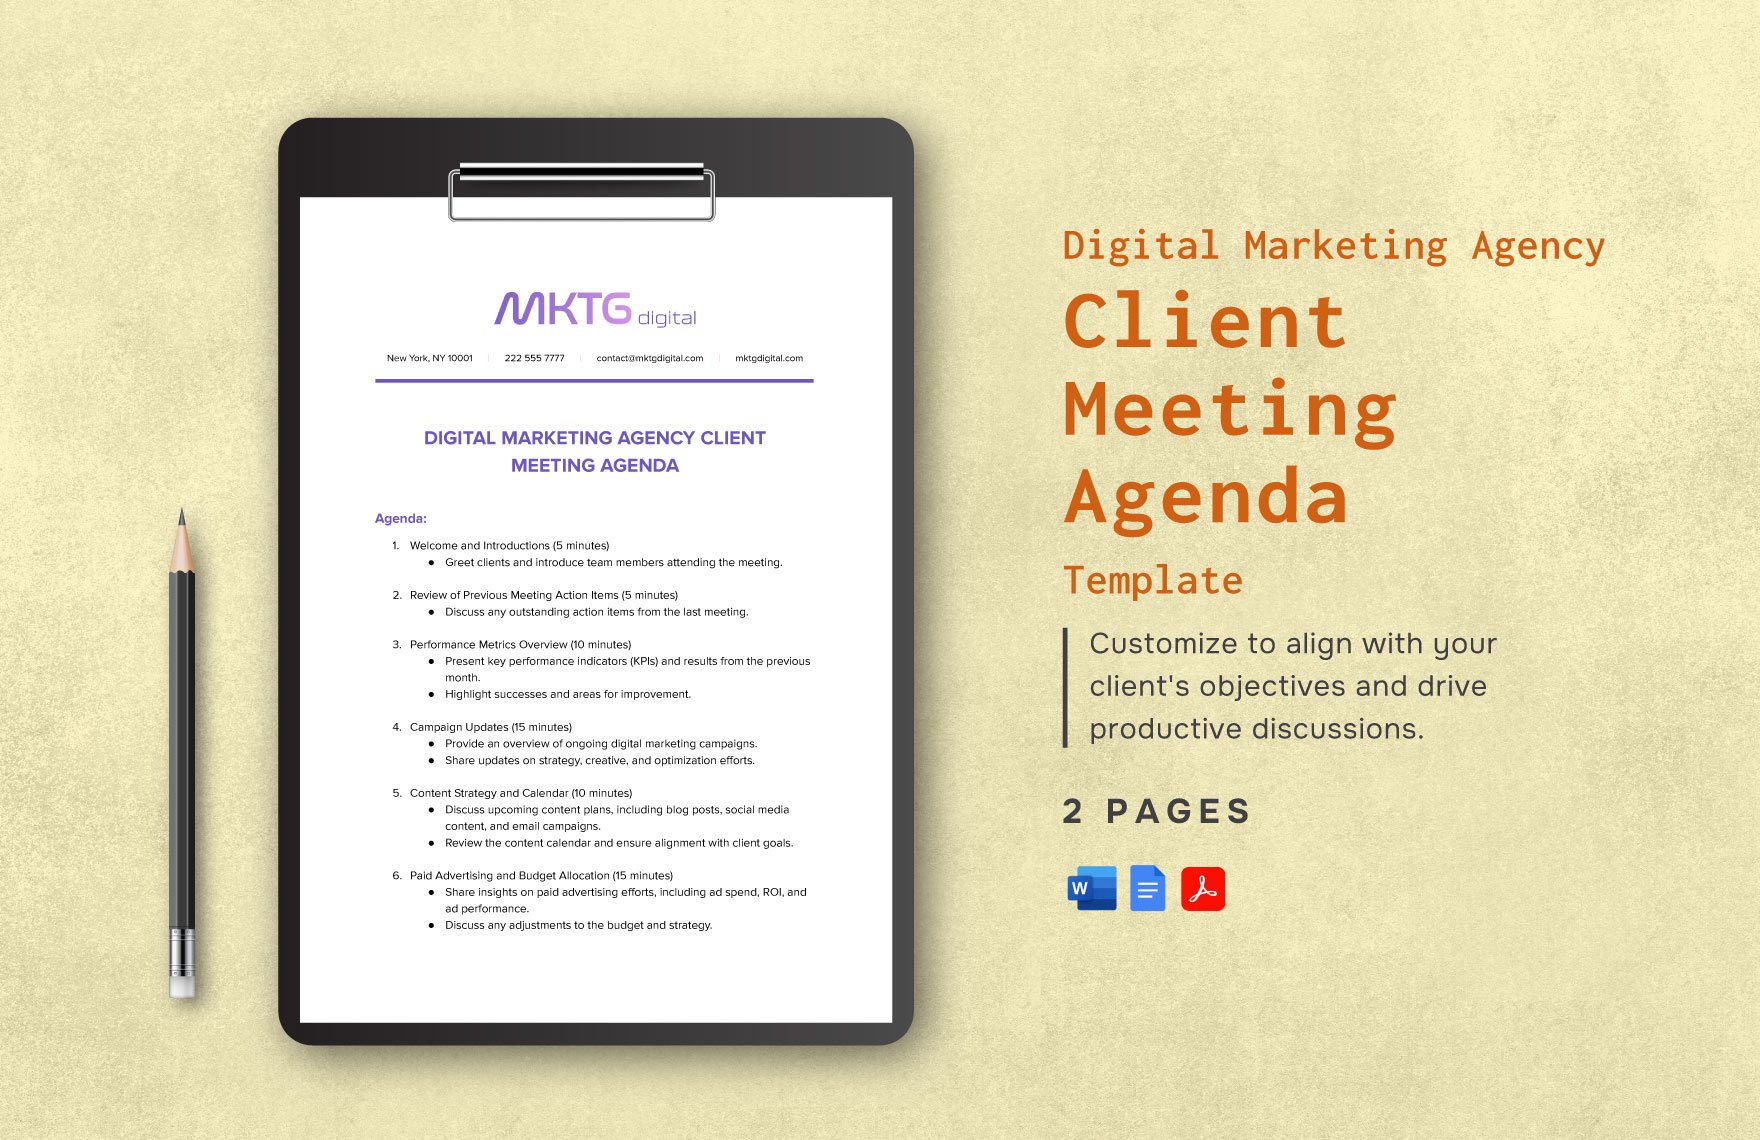 Digital Marketing Agency Client Meeting Agenda Template